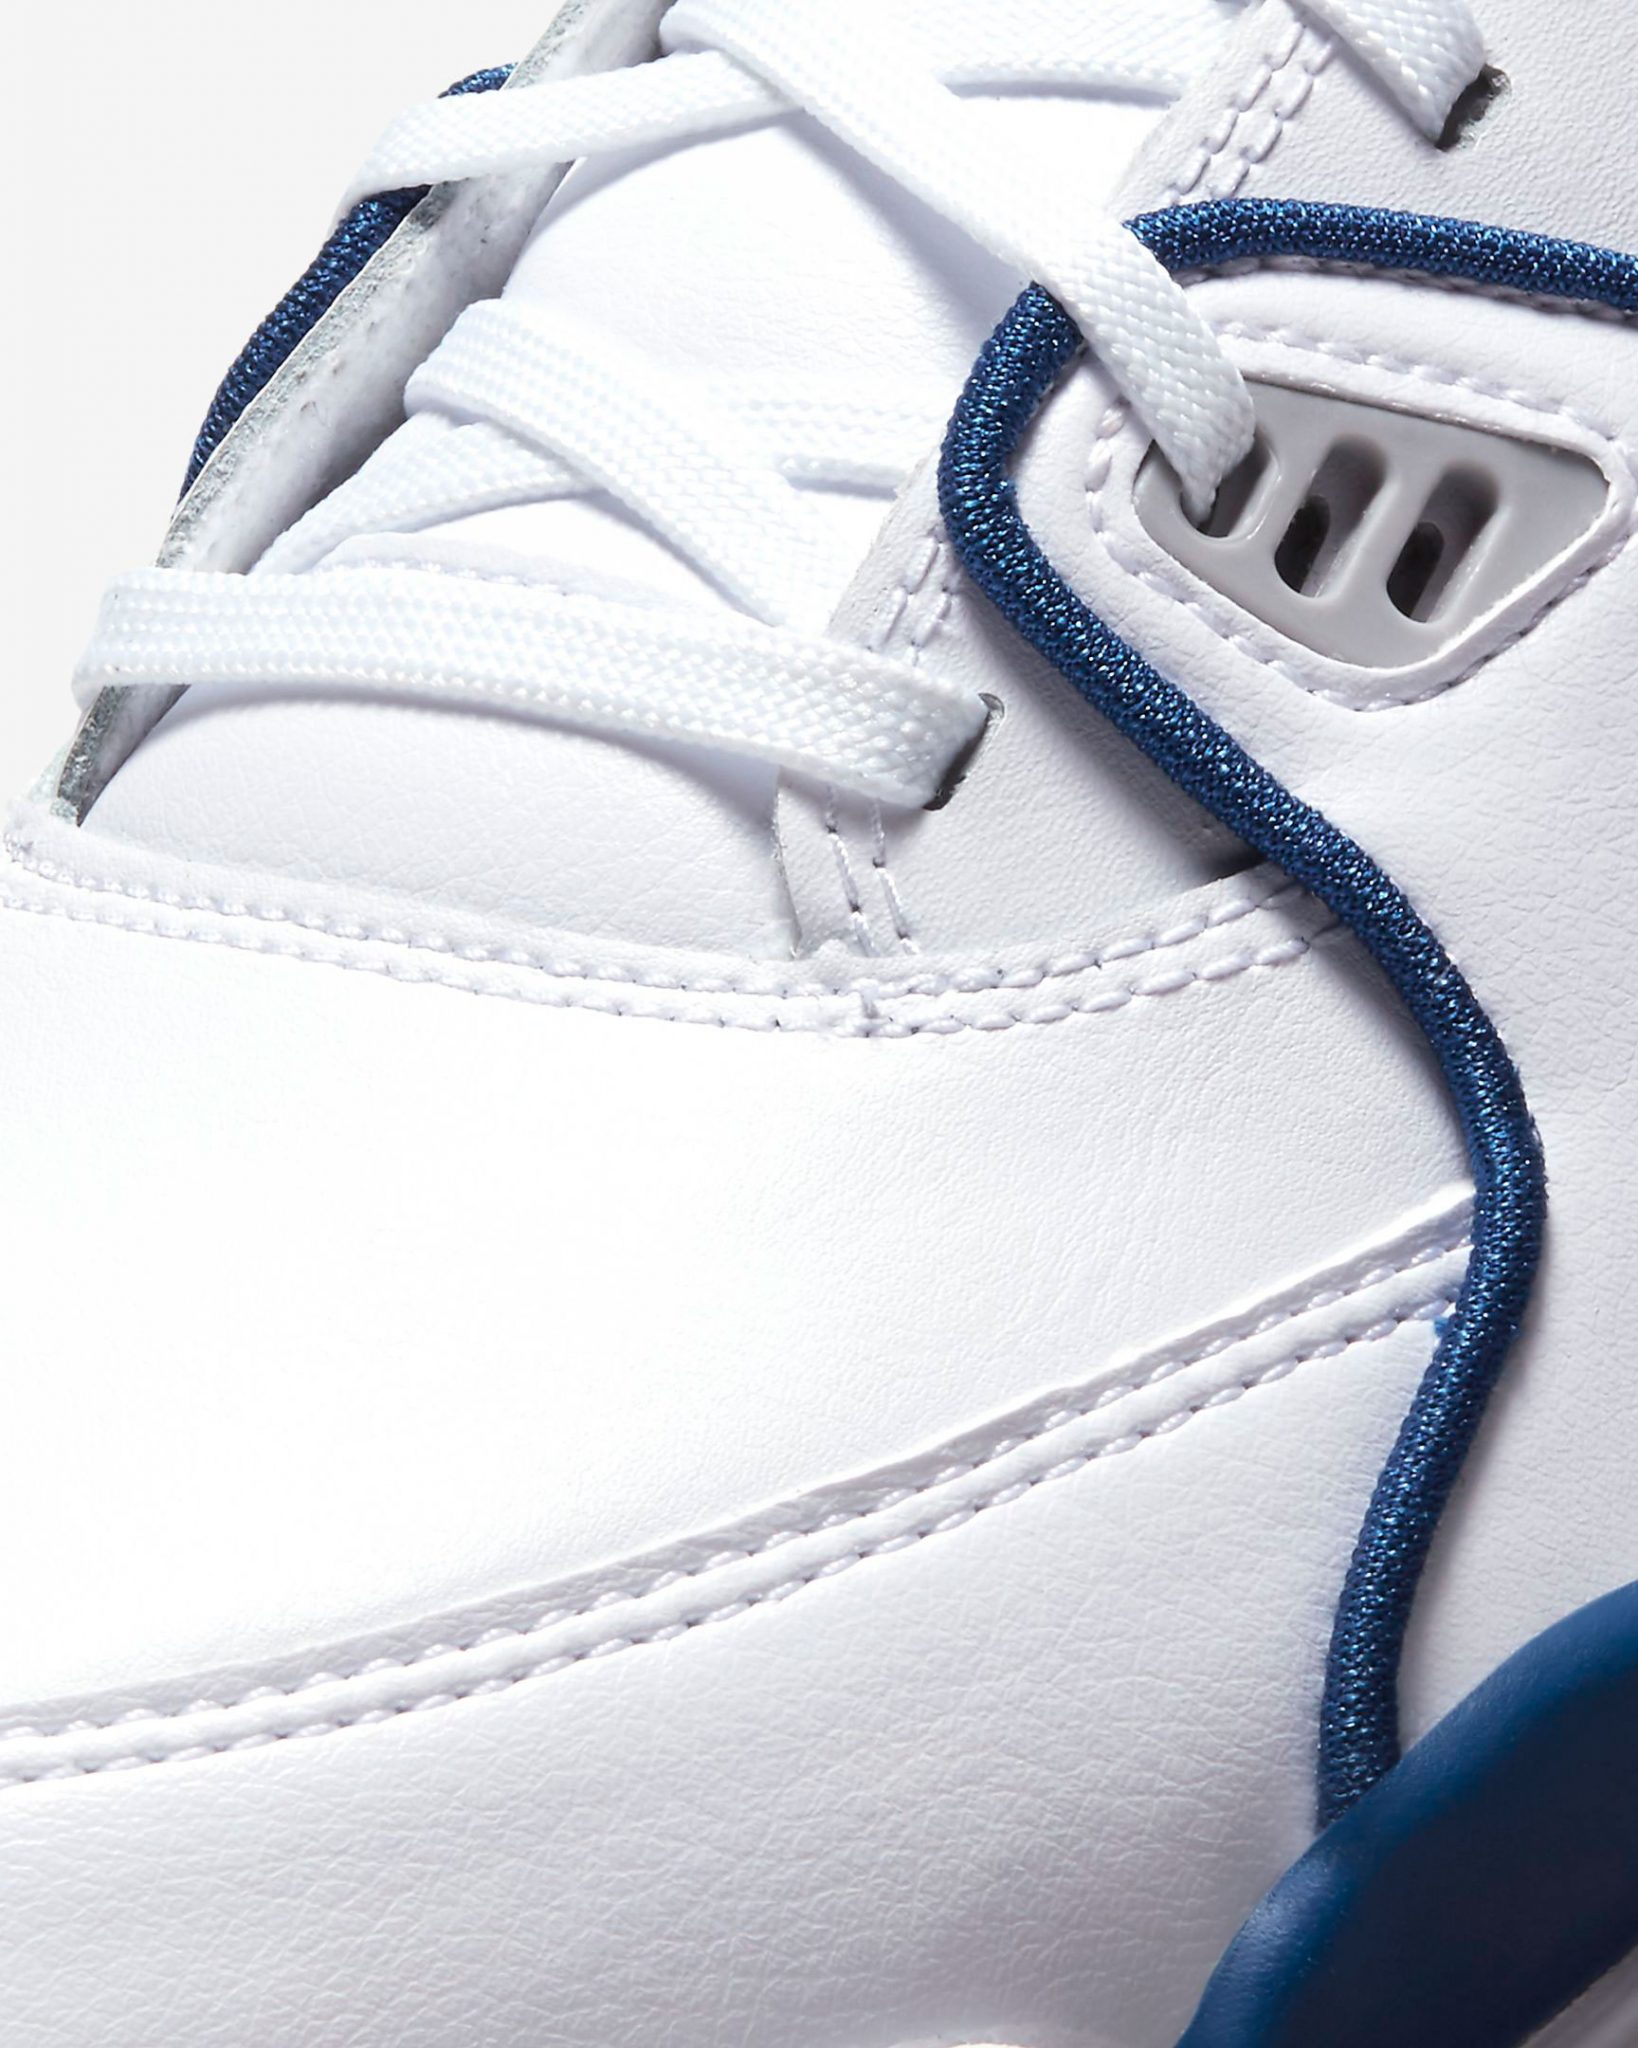 Where to Buy Nike Air Flight 89 True Blue | SneakerFits.com